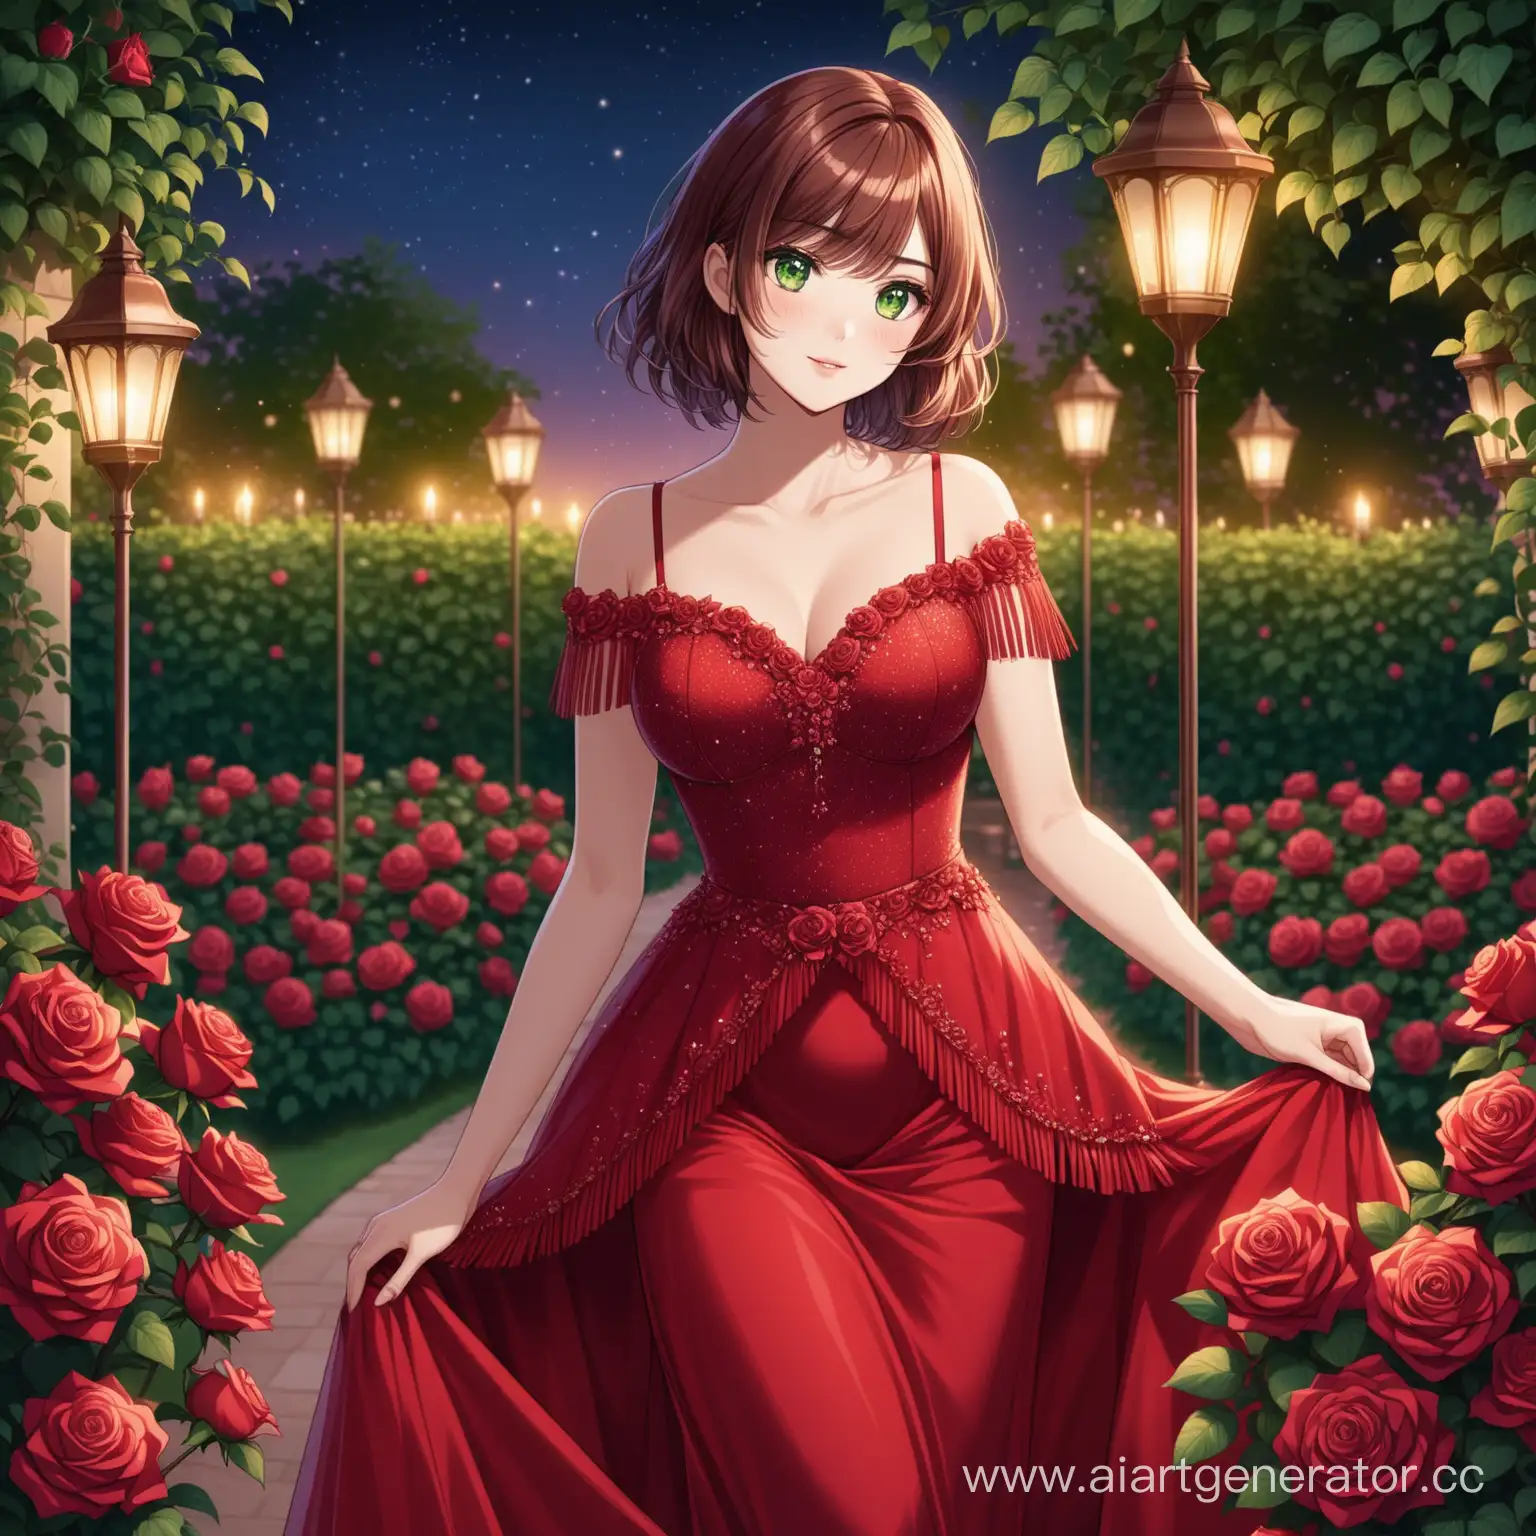 Aria-Roscente-Nighttime-Garden-Portrait-Elegant-Woman-Amidst-Red-Roses